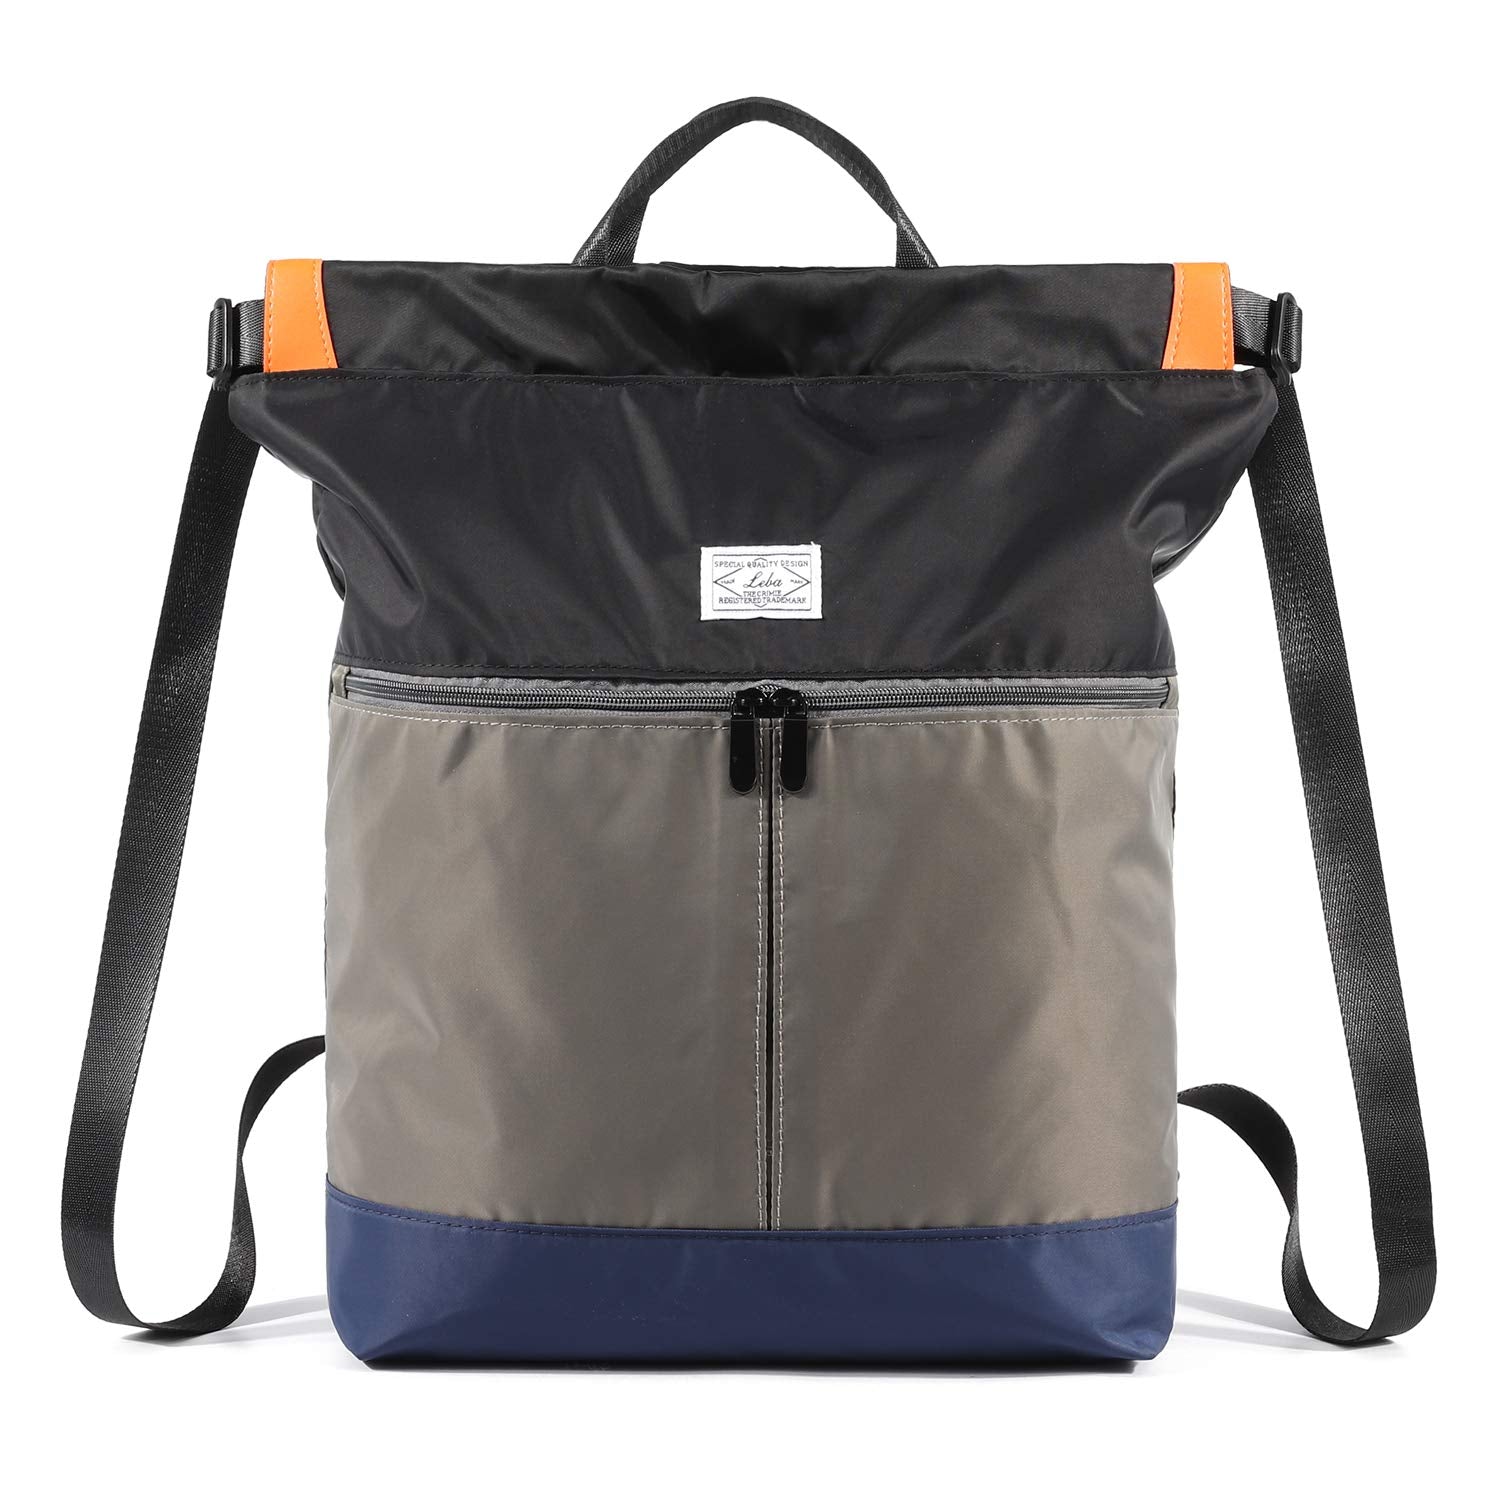 WANDF 6032 Nylon Drawstring Backpack String Bag Sackpack Cinch best